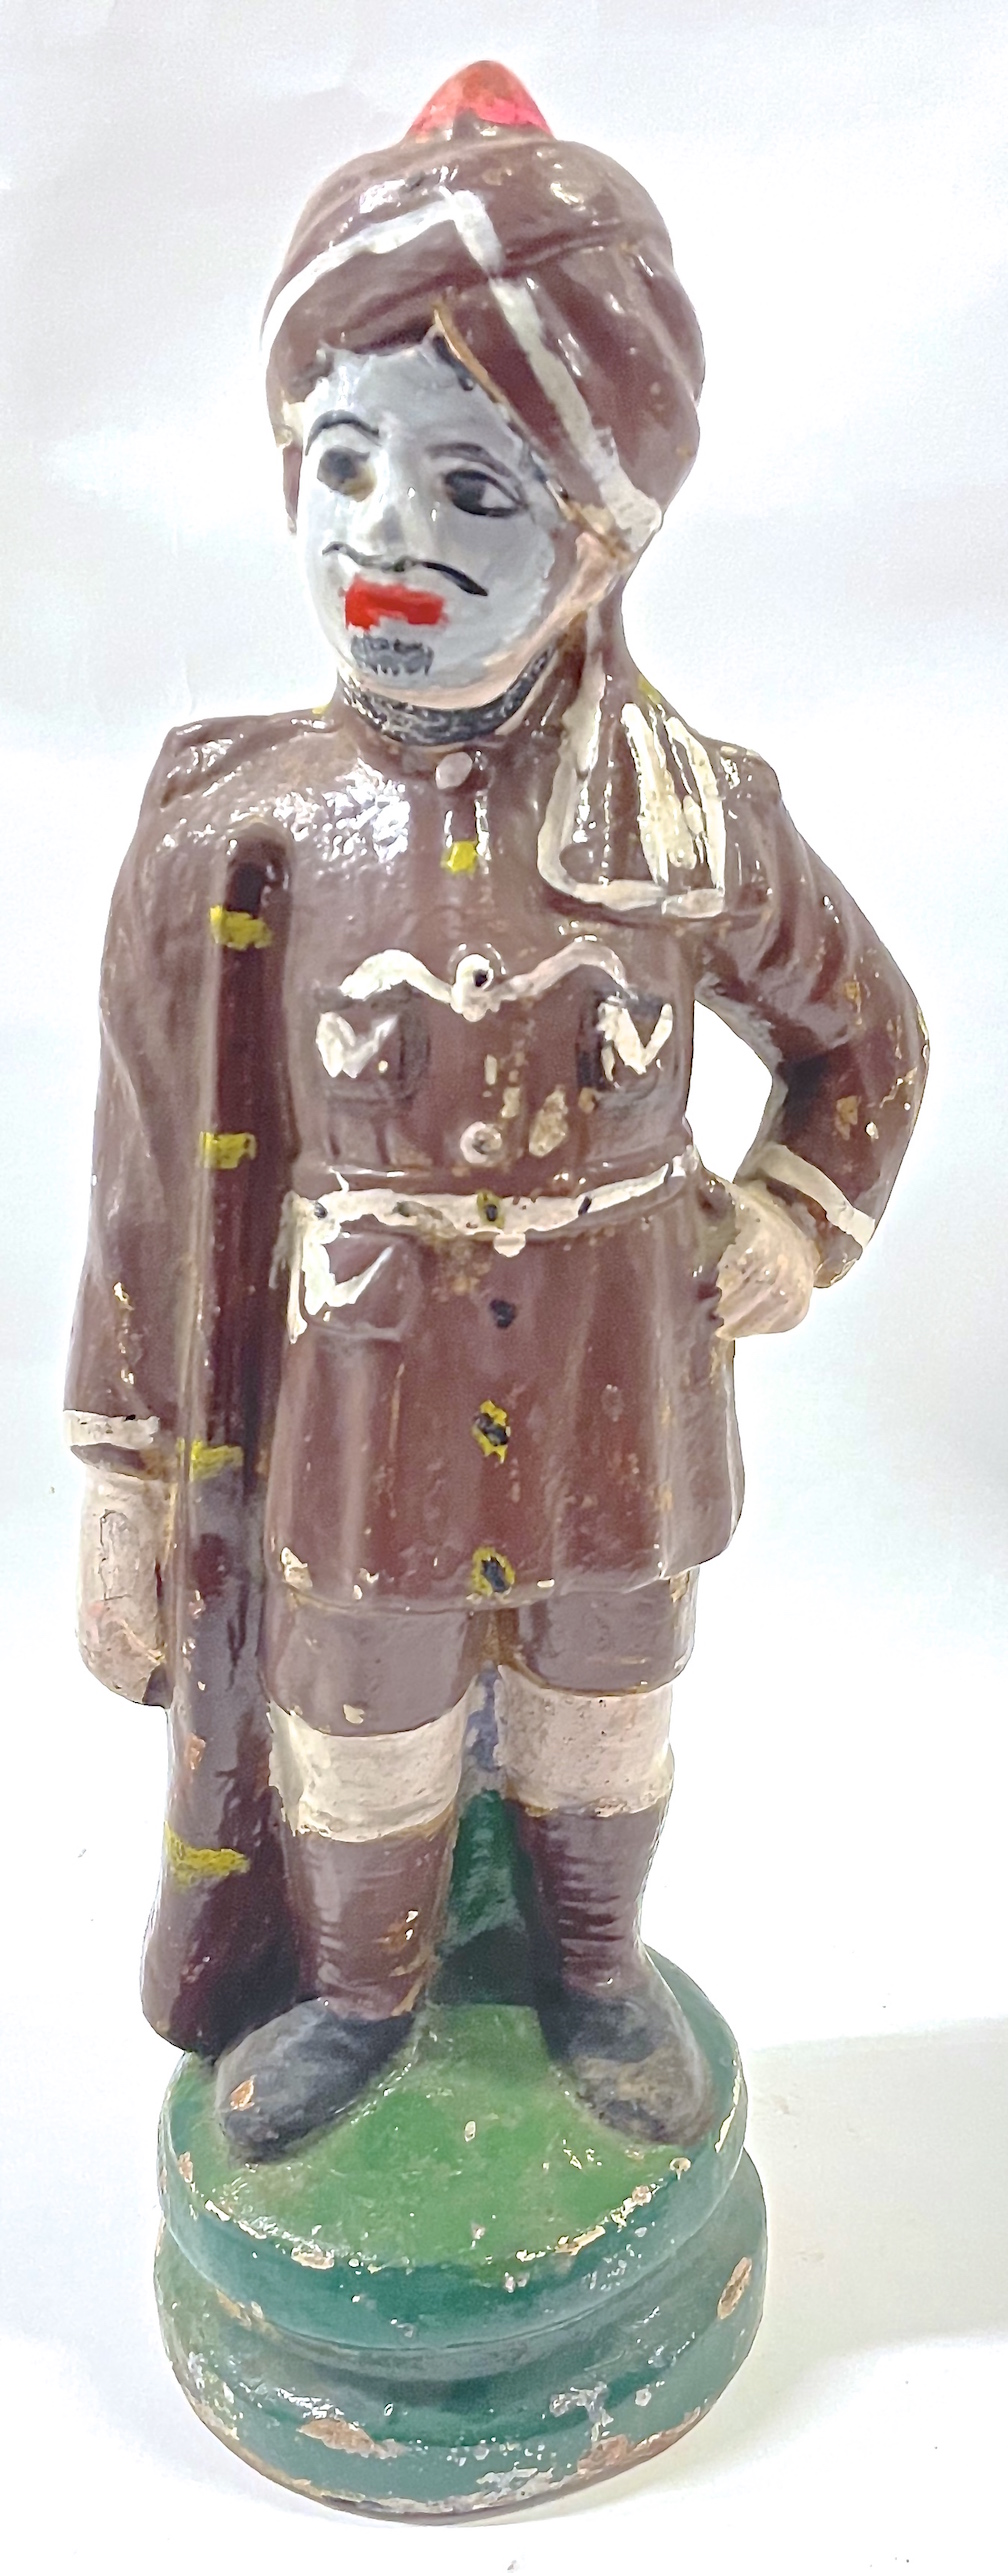 Antique Indian Soldier Figurine~P77622643